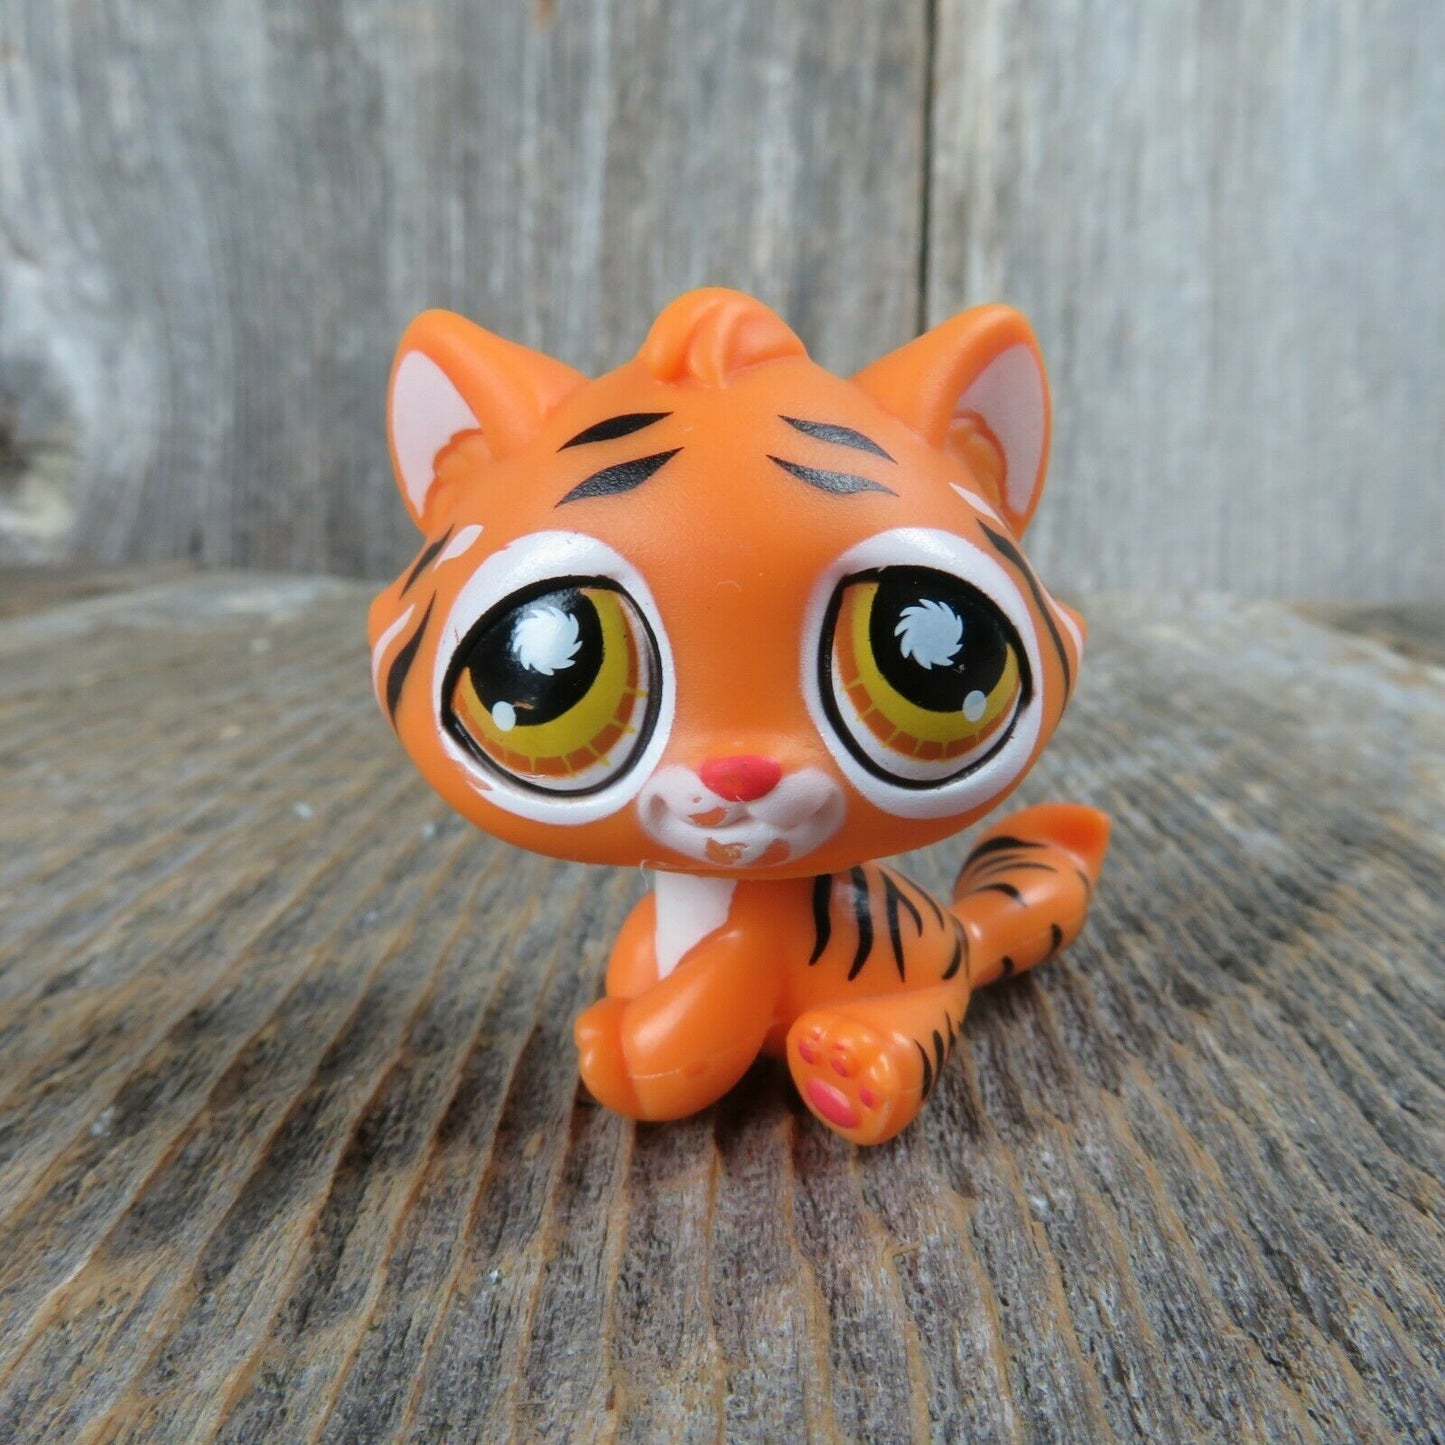 Littlest Pet Shop Toys Mini Figures LPS Animal Cat Brazil